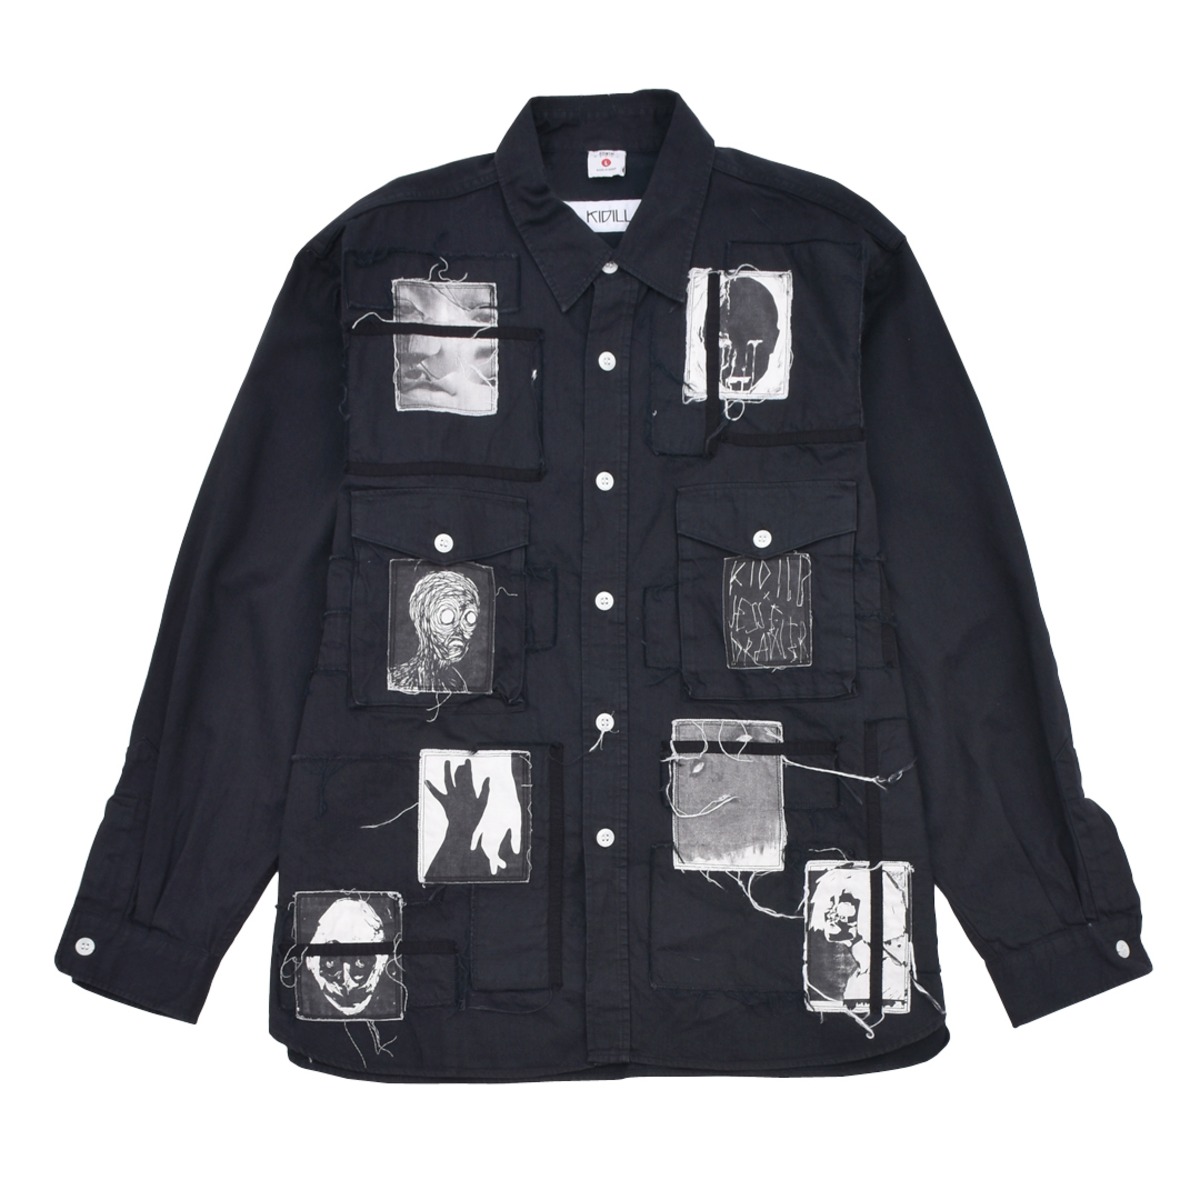 KIDILL X EDWIN Patches Black Denim Shirt-Jacket - Wrong Weather